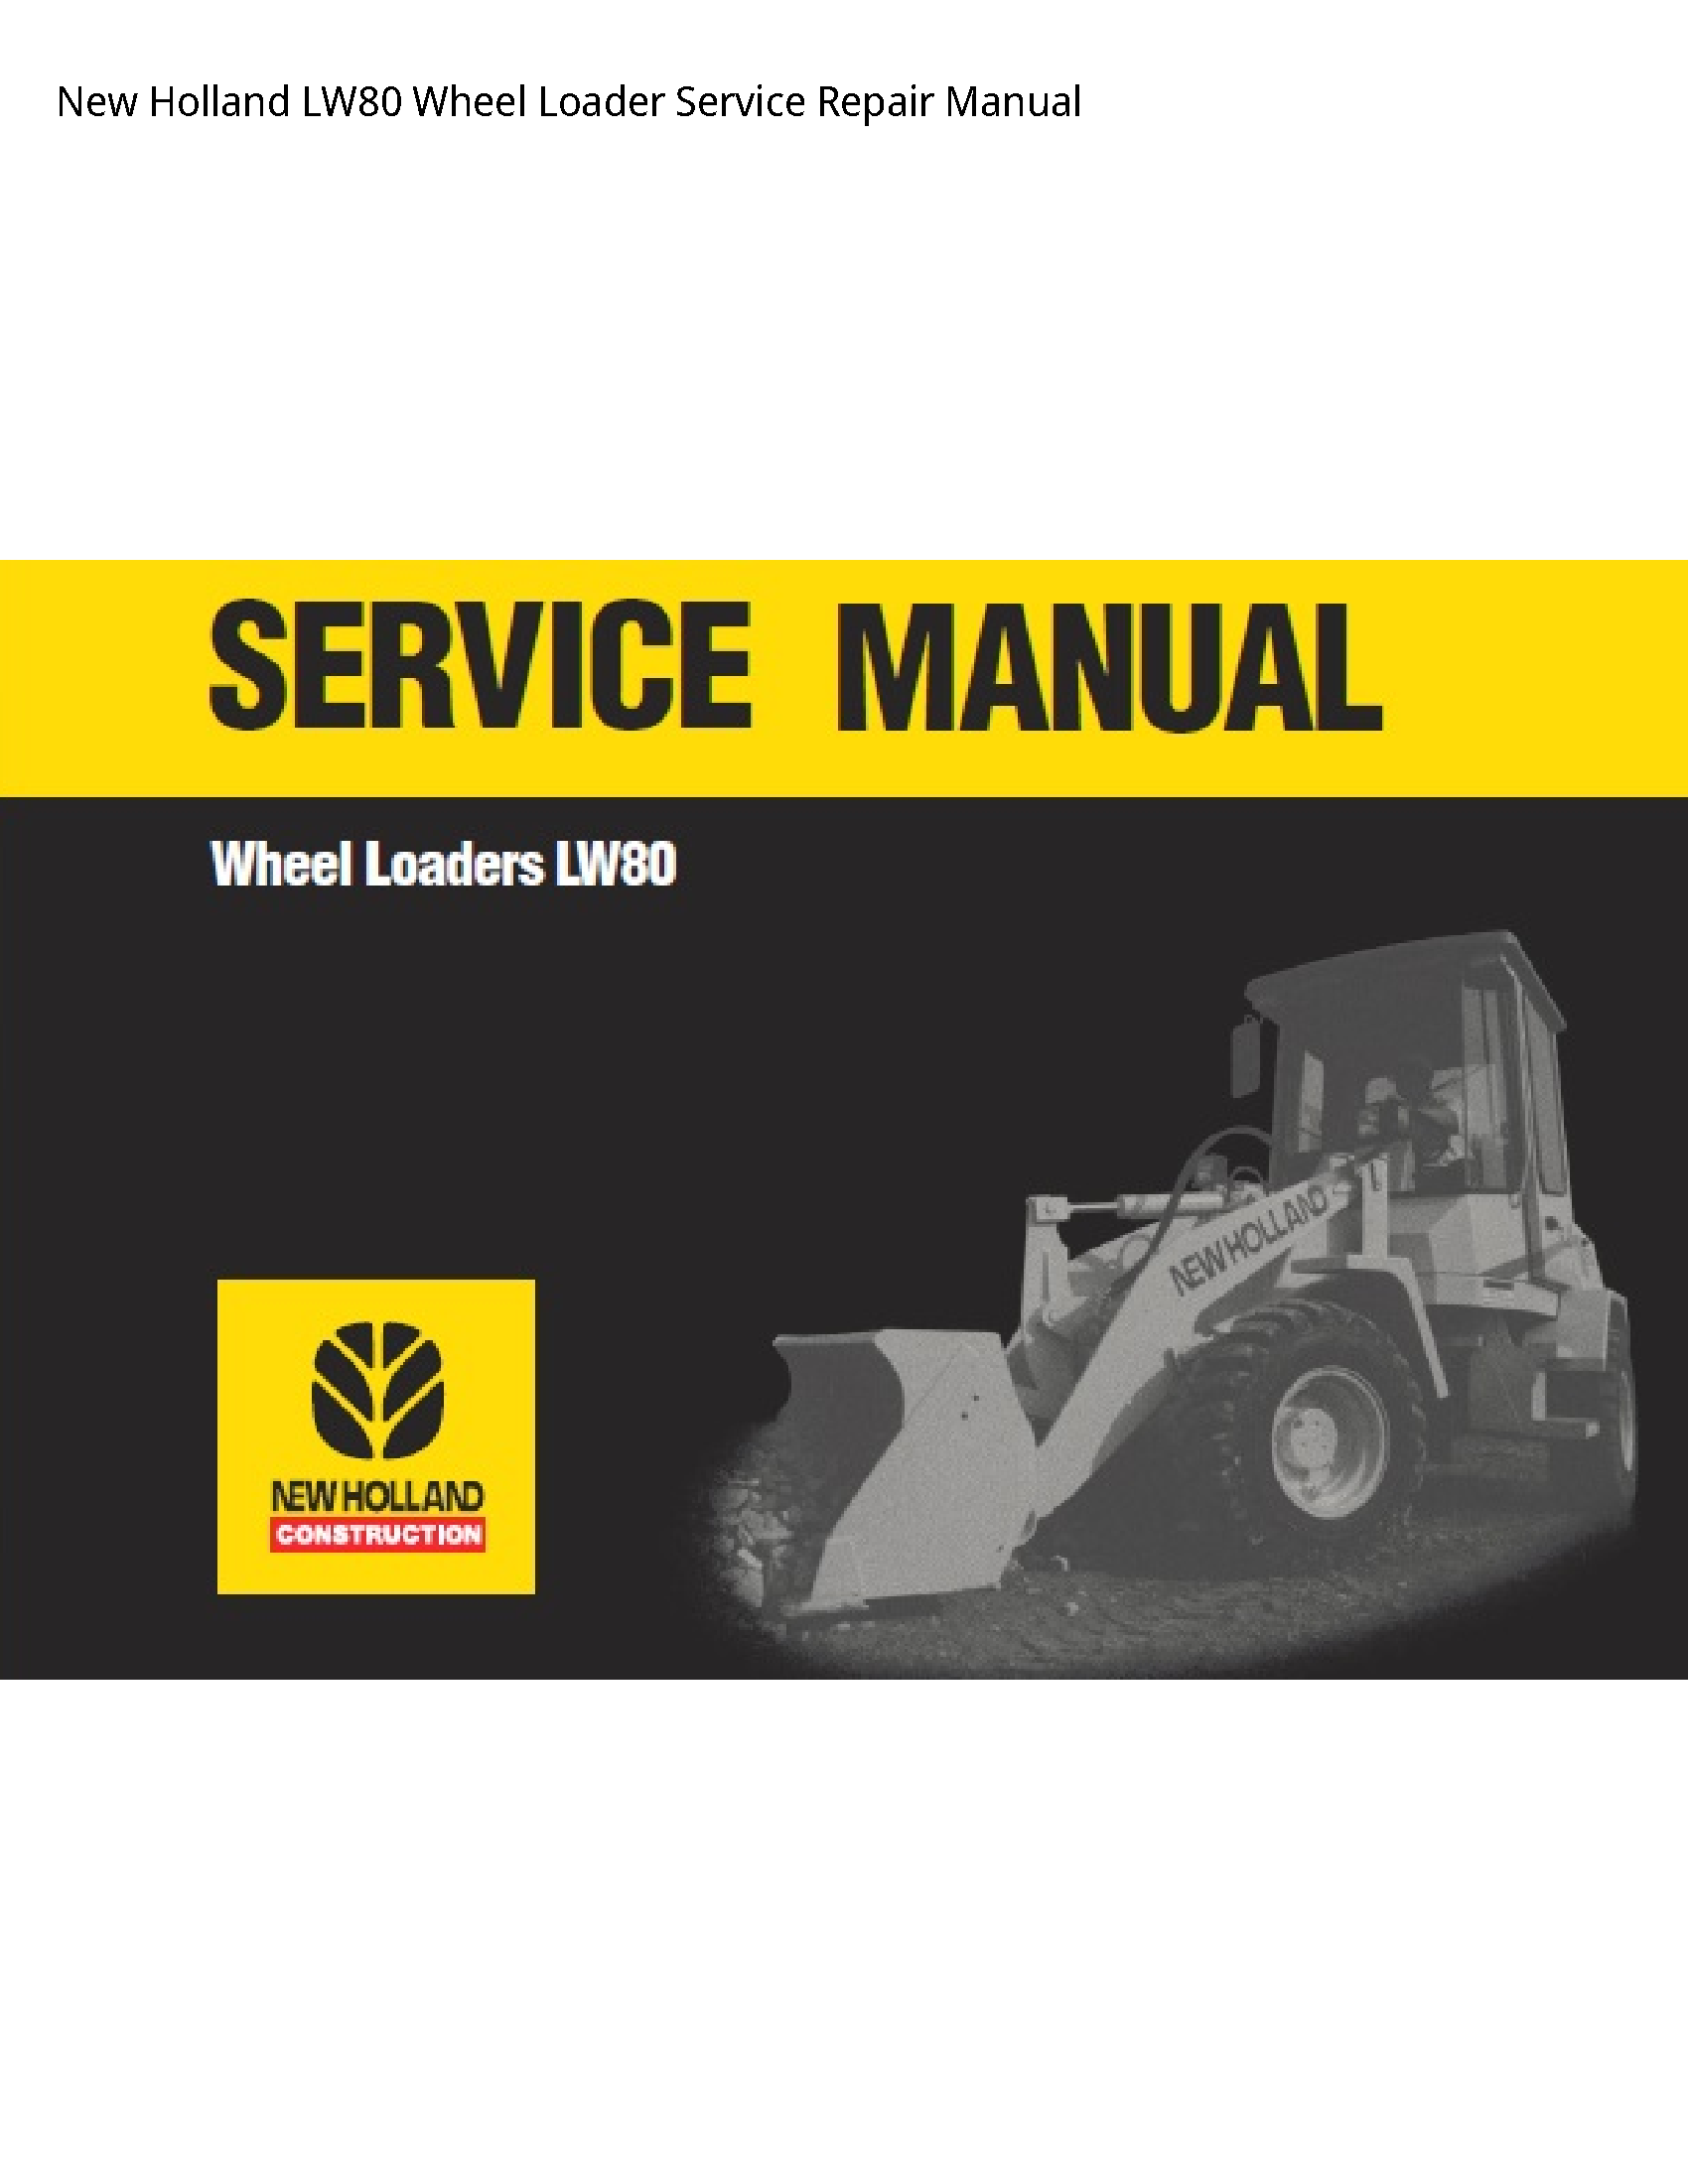 New Holland LW80 Wheel Loader manual